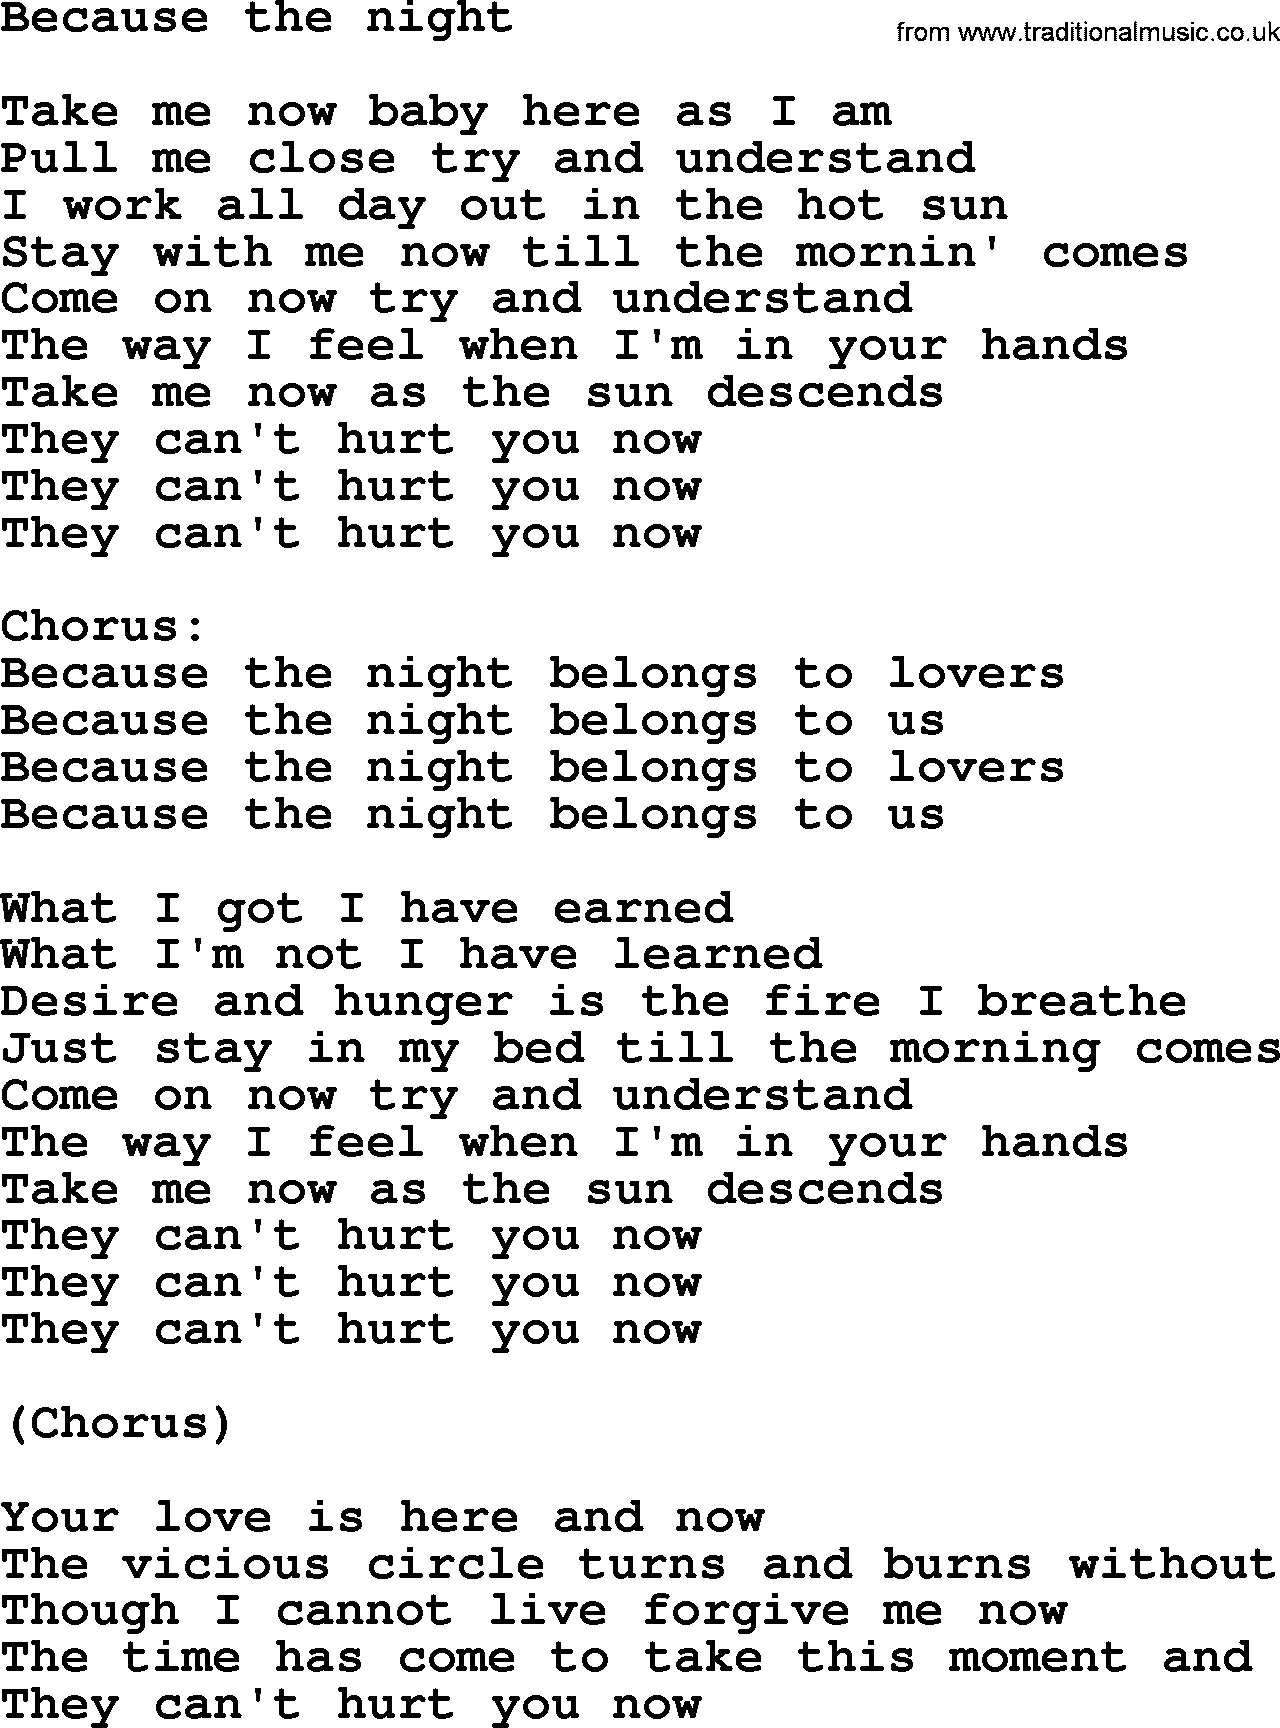 Bruce Springsteen song: Because The Night lyrics